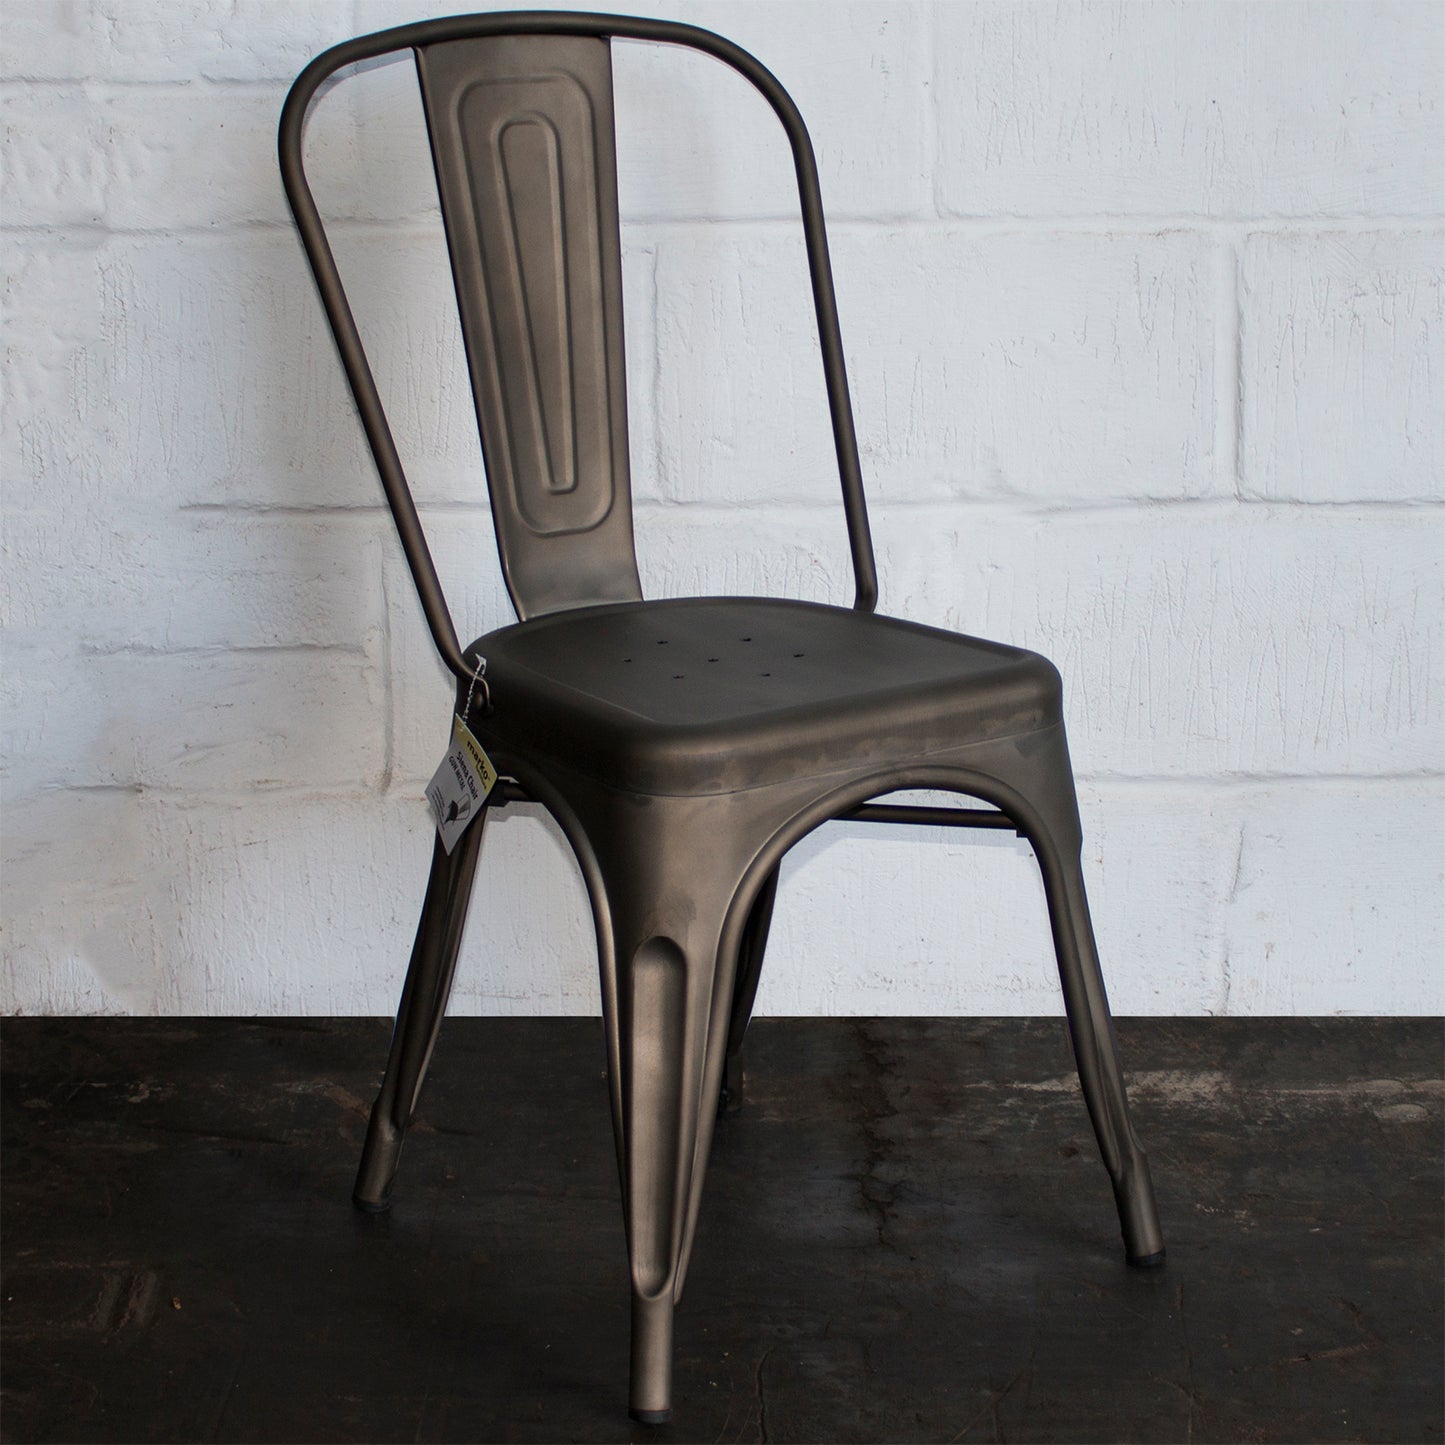 5PC Enna Table Siena Chair & Castel Stool Set - Gun Metal Grey